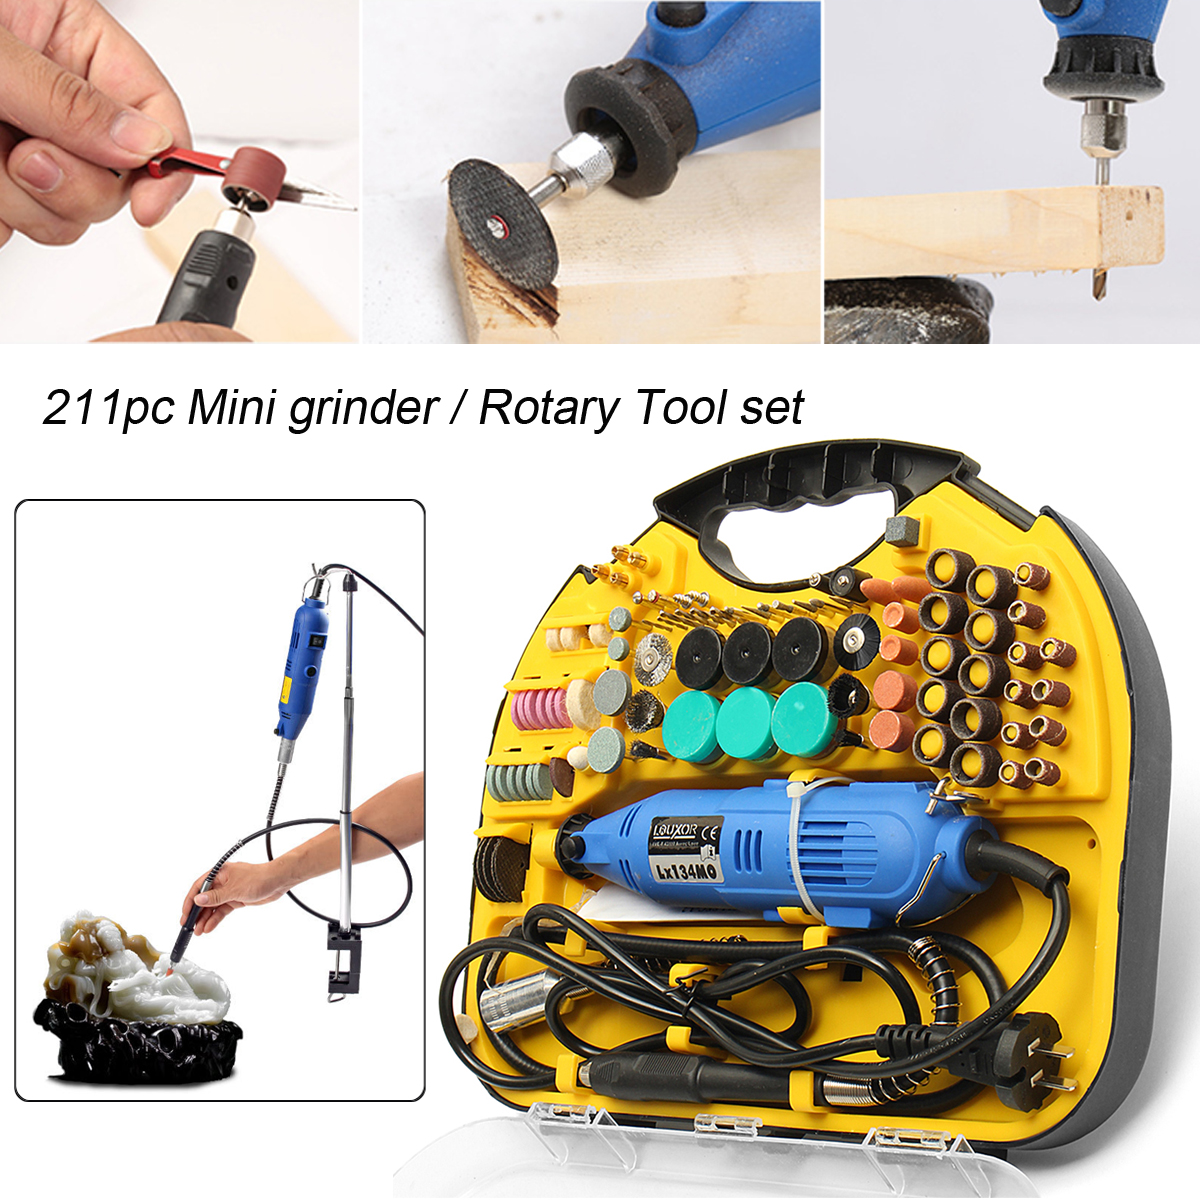 211pcs Rotary tool Mini Drill Set Grinder Engraver Sander Polisher Hobby Craft Grinding Power Tool